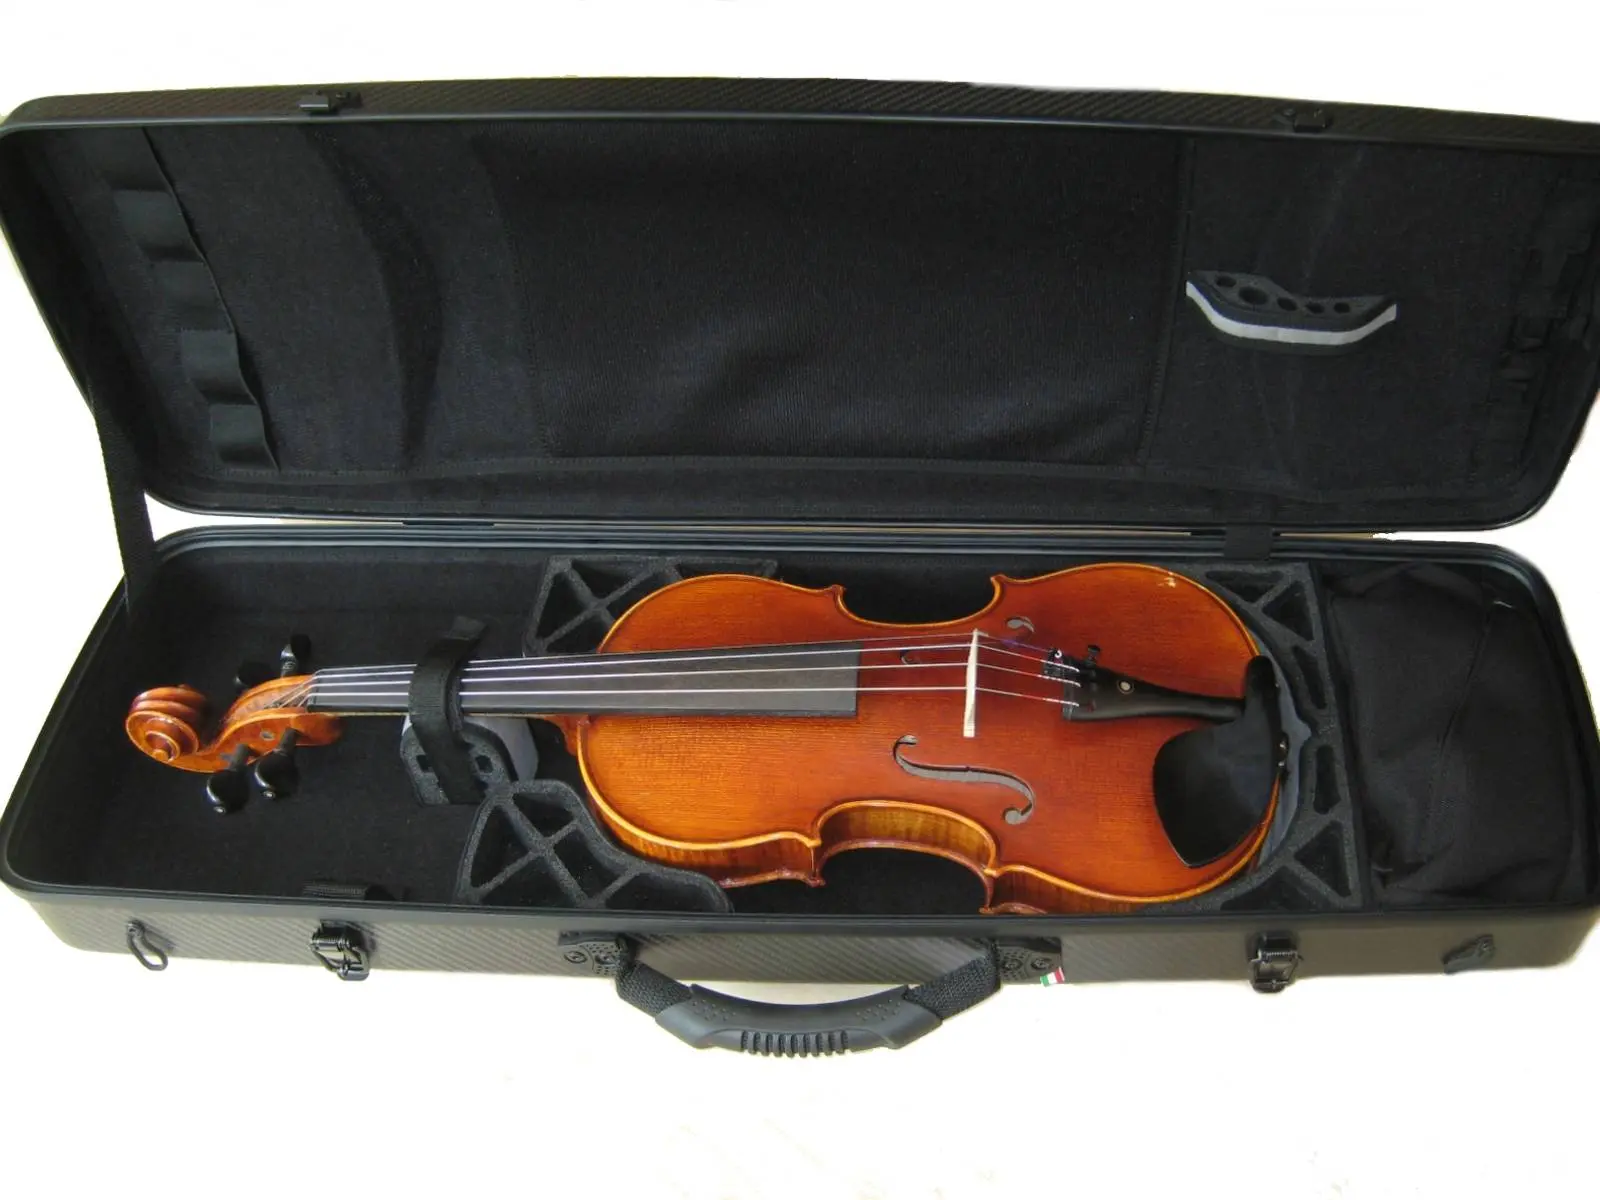 bogaro and clemente violin case - What is a suspension violin case